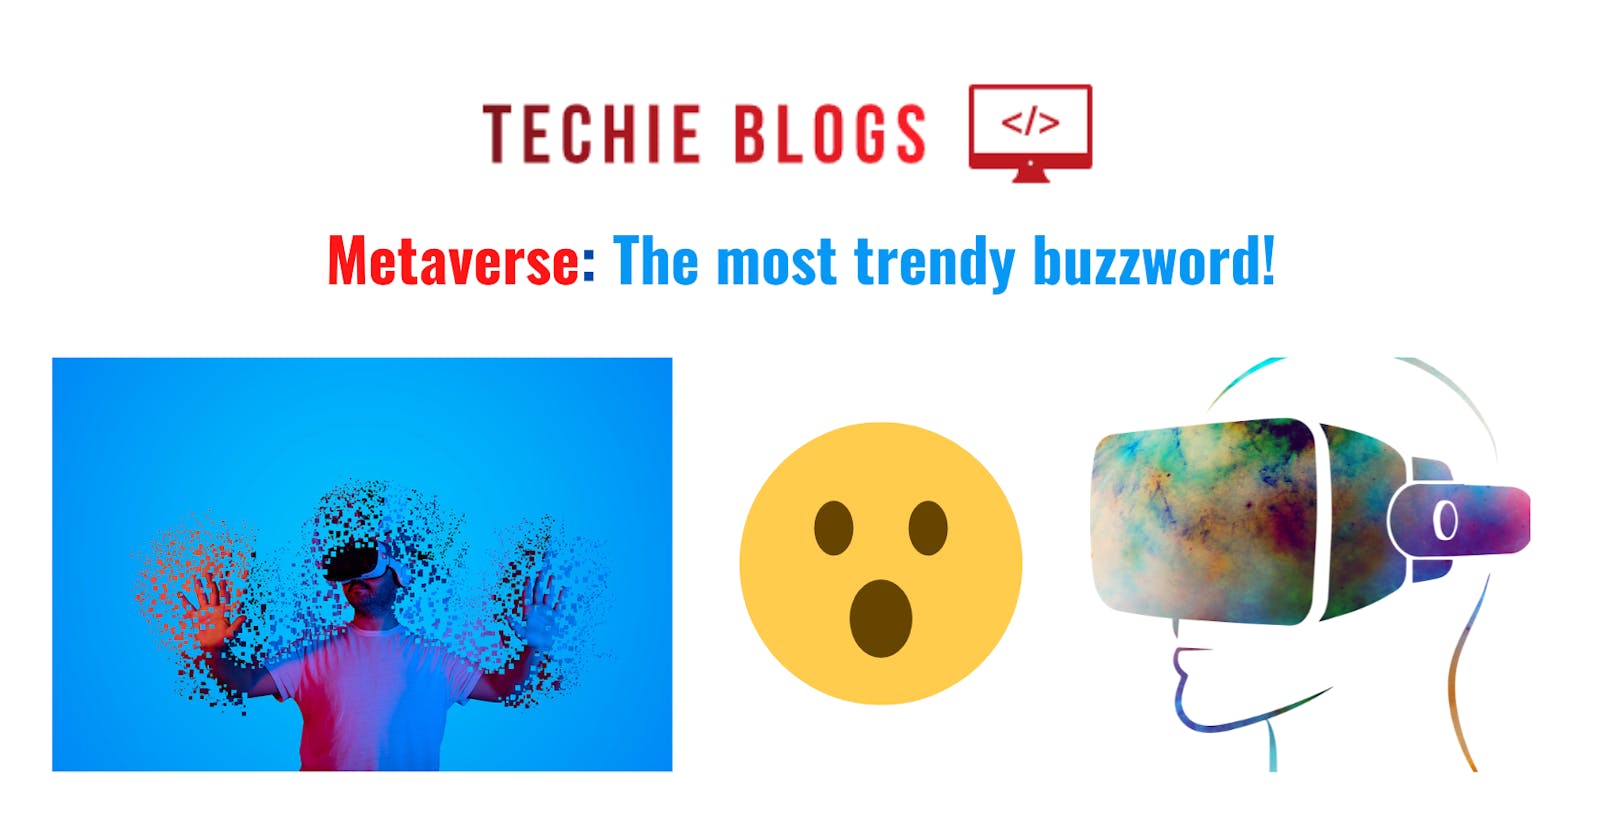 Metaverse: The most trendy buzzword!